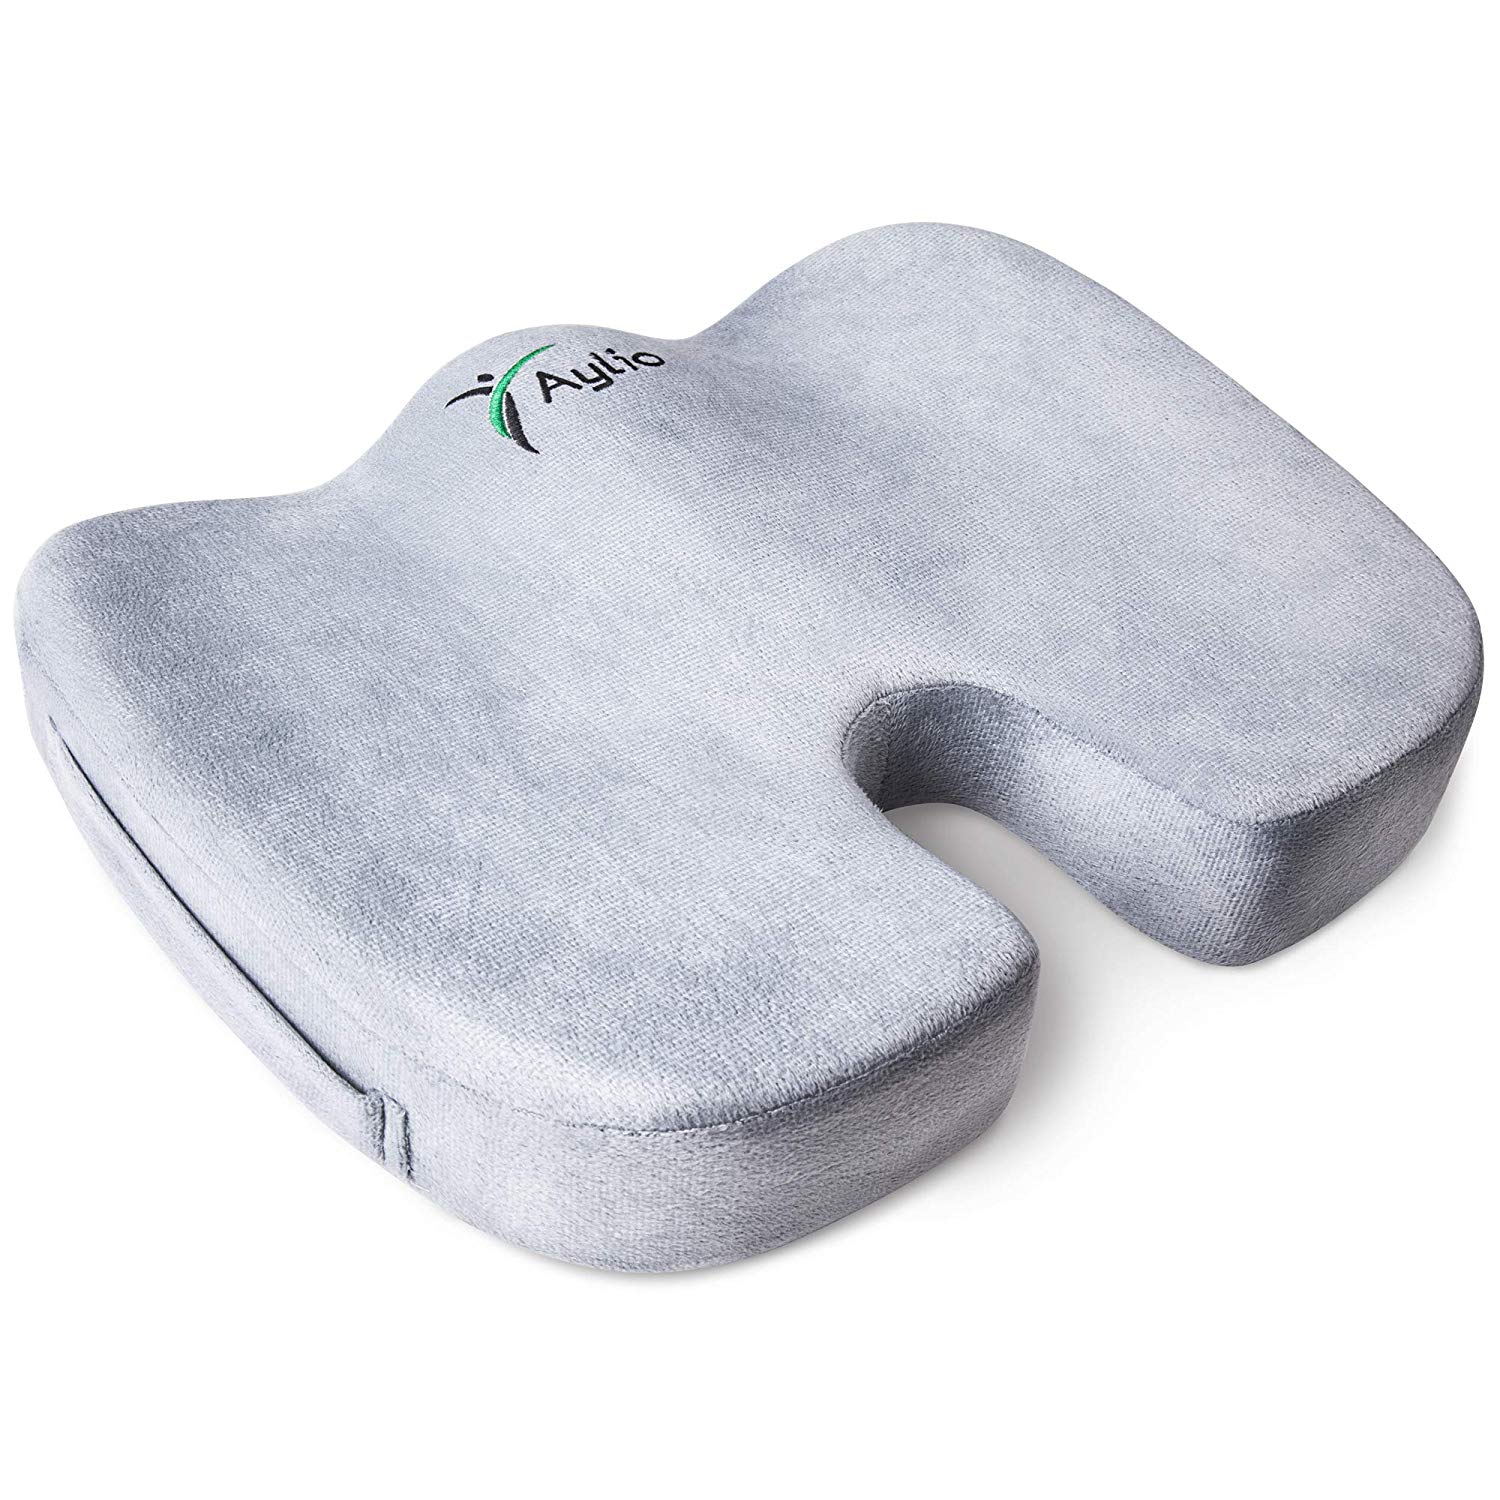 Libiyi Seat Comfort Pro Cushion for Long Sitting Hours Chair Car Cushions